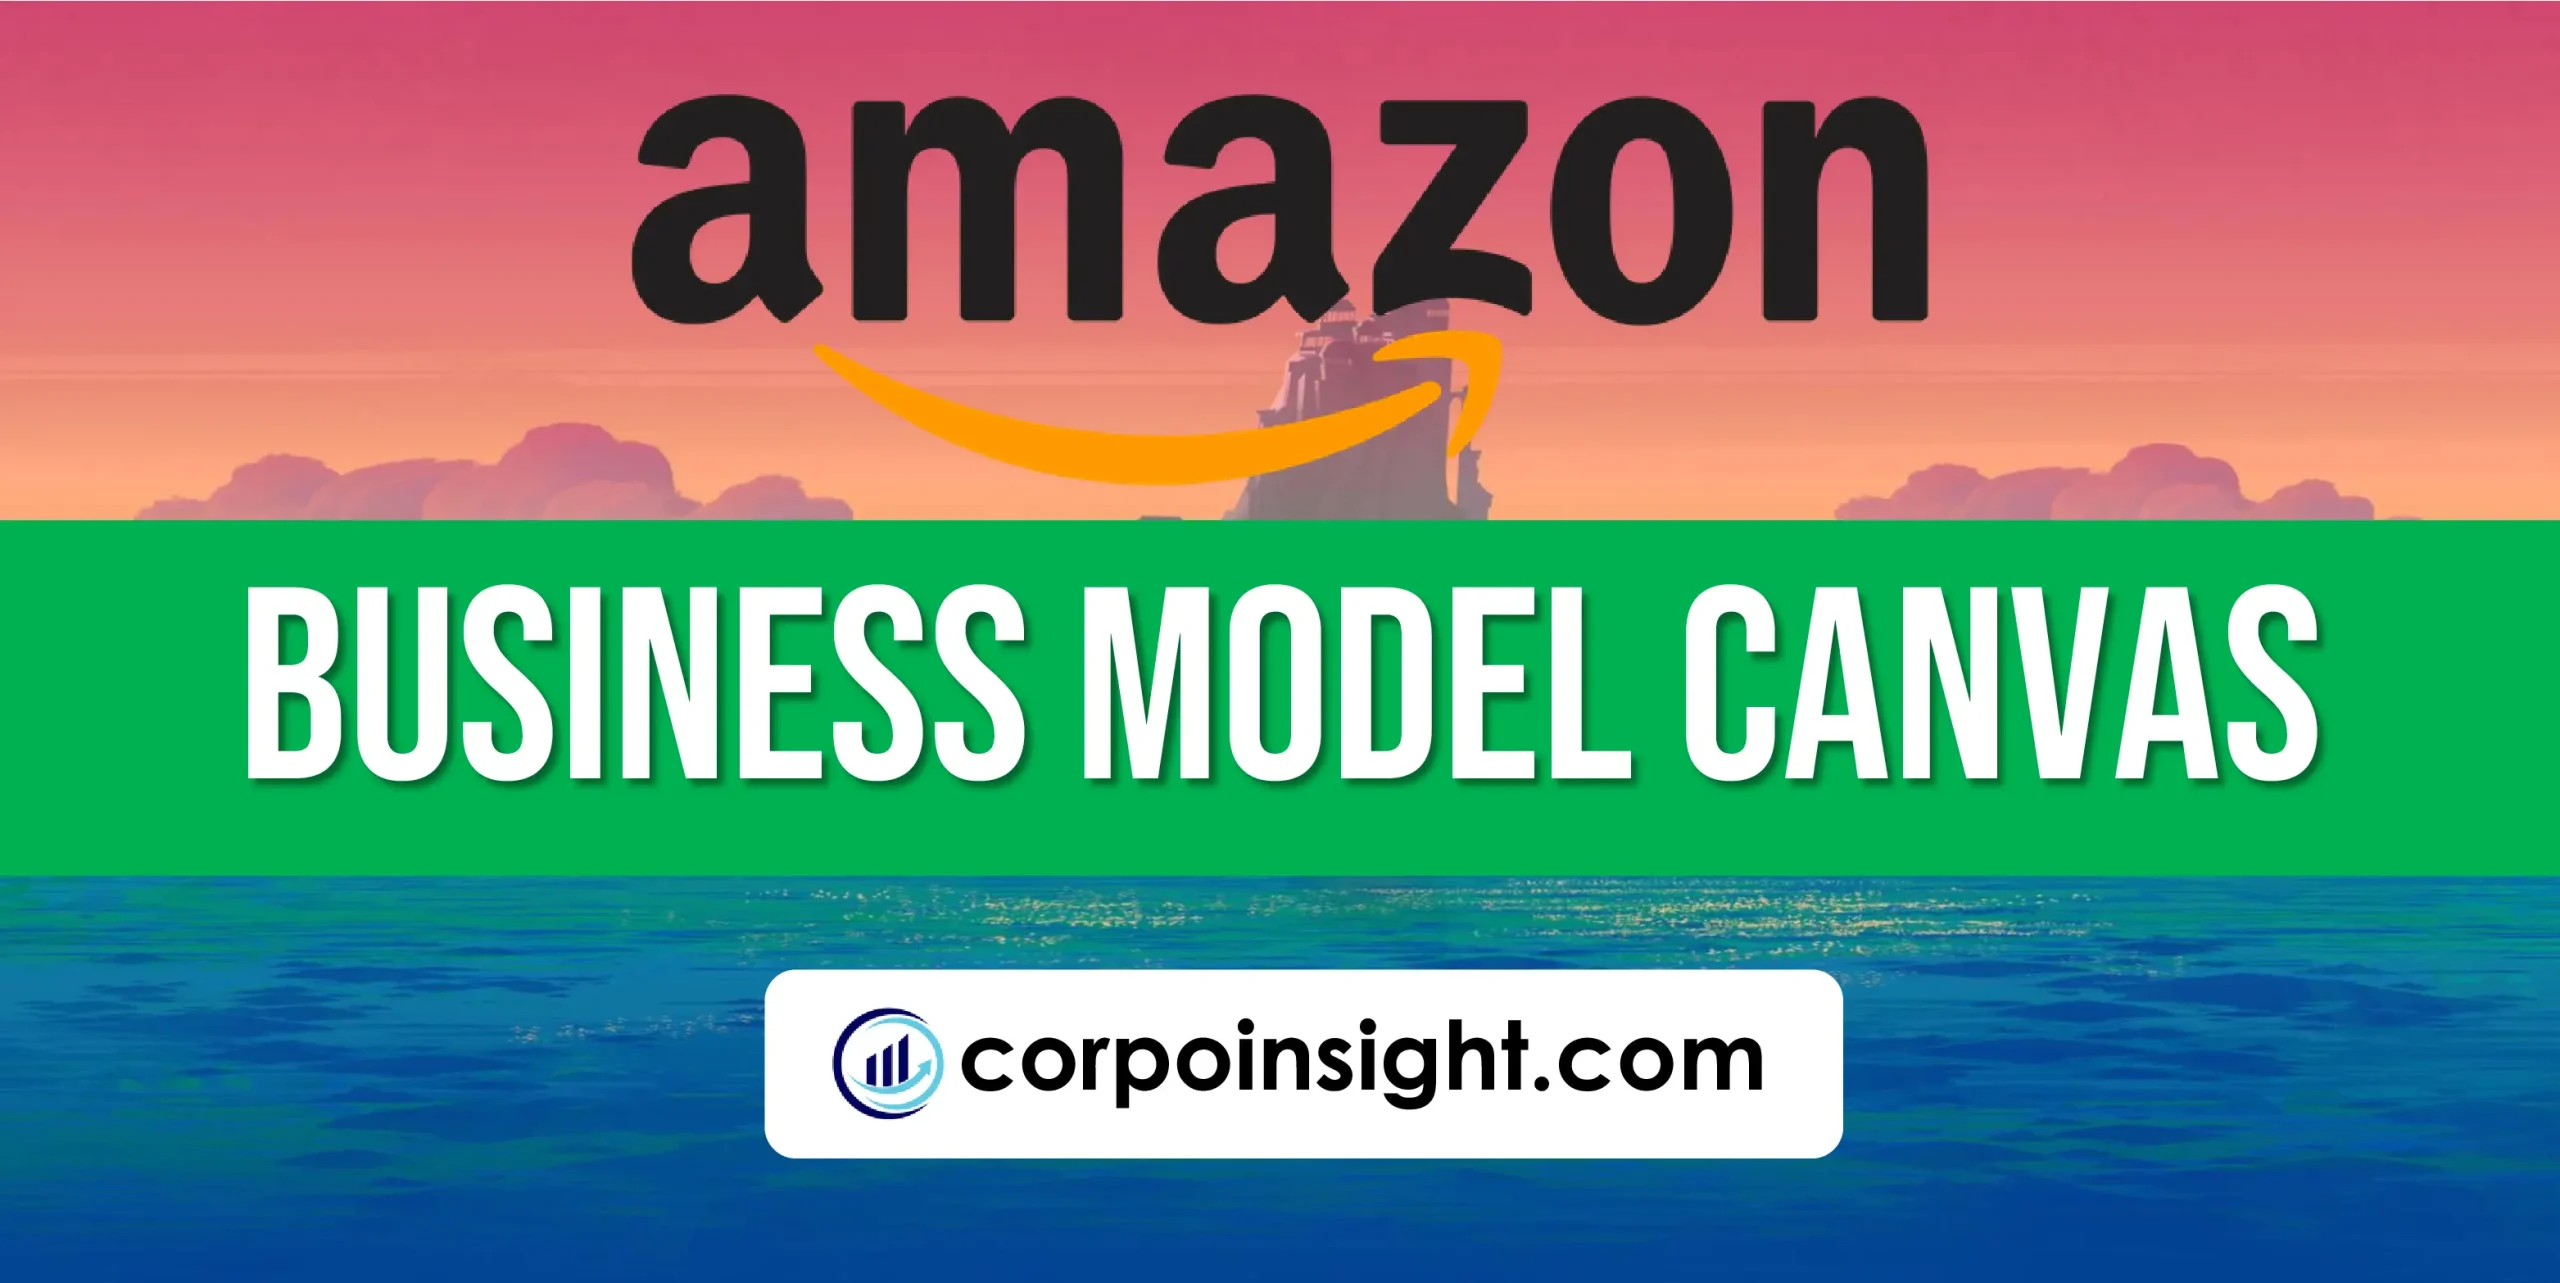 Amazon Business Model Canvas